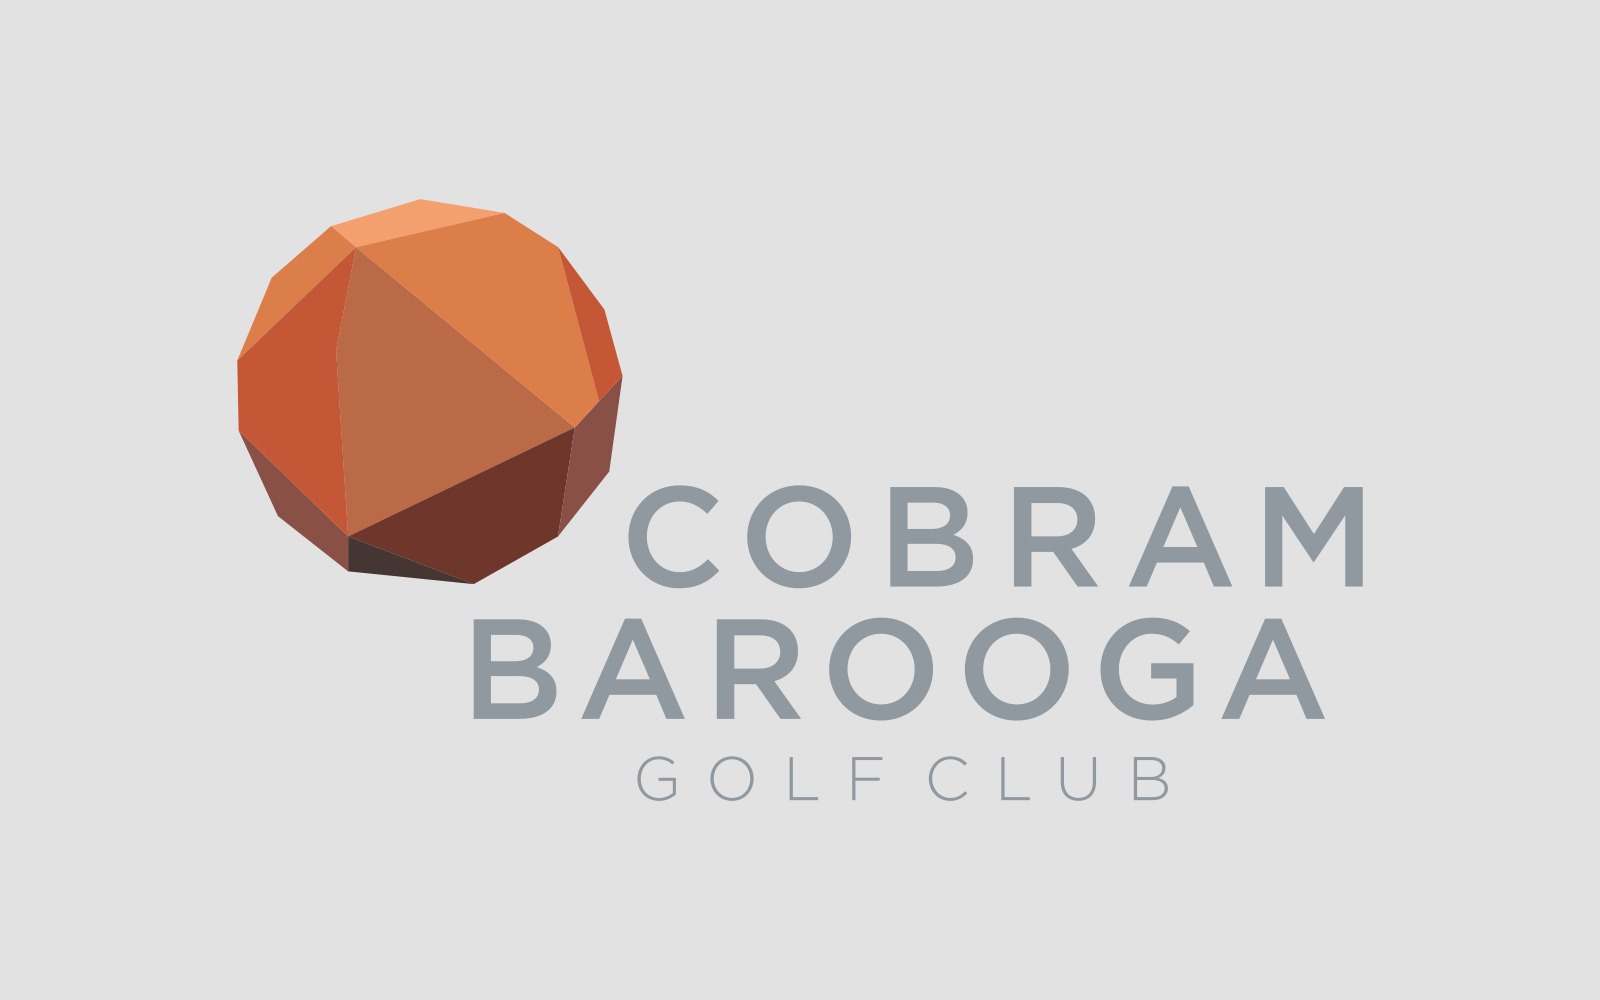 Cobram Barooga Golf Club